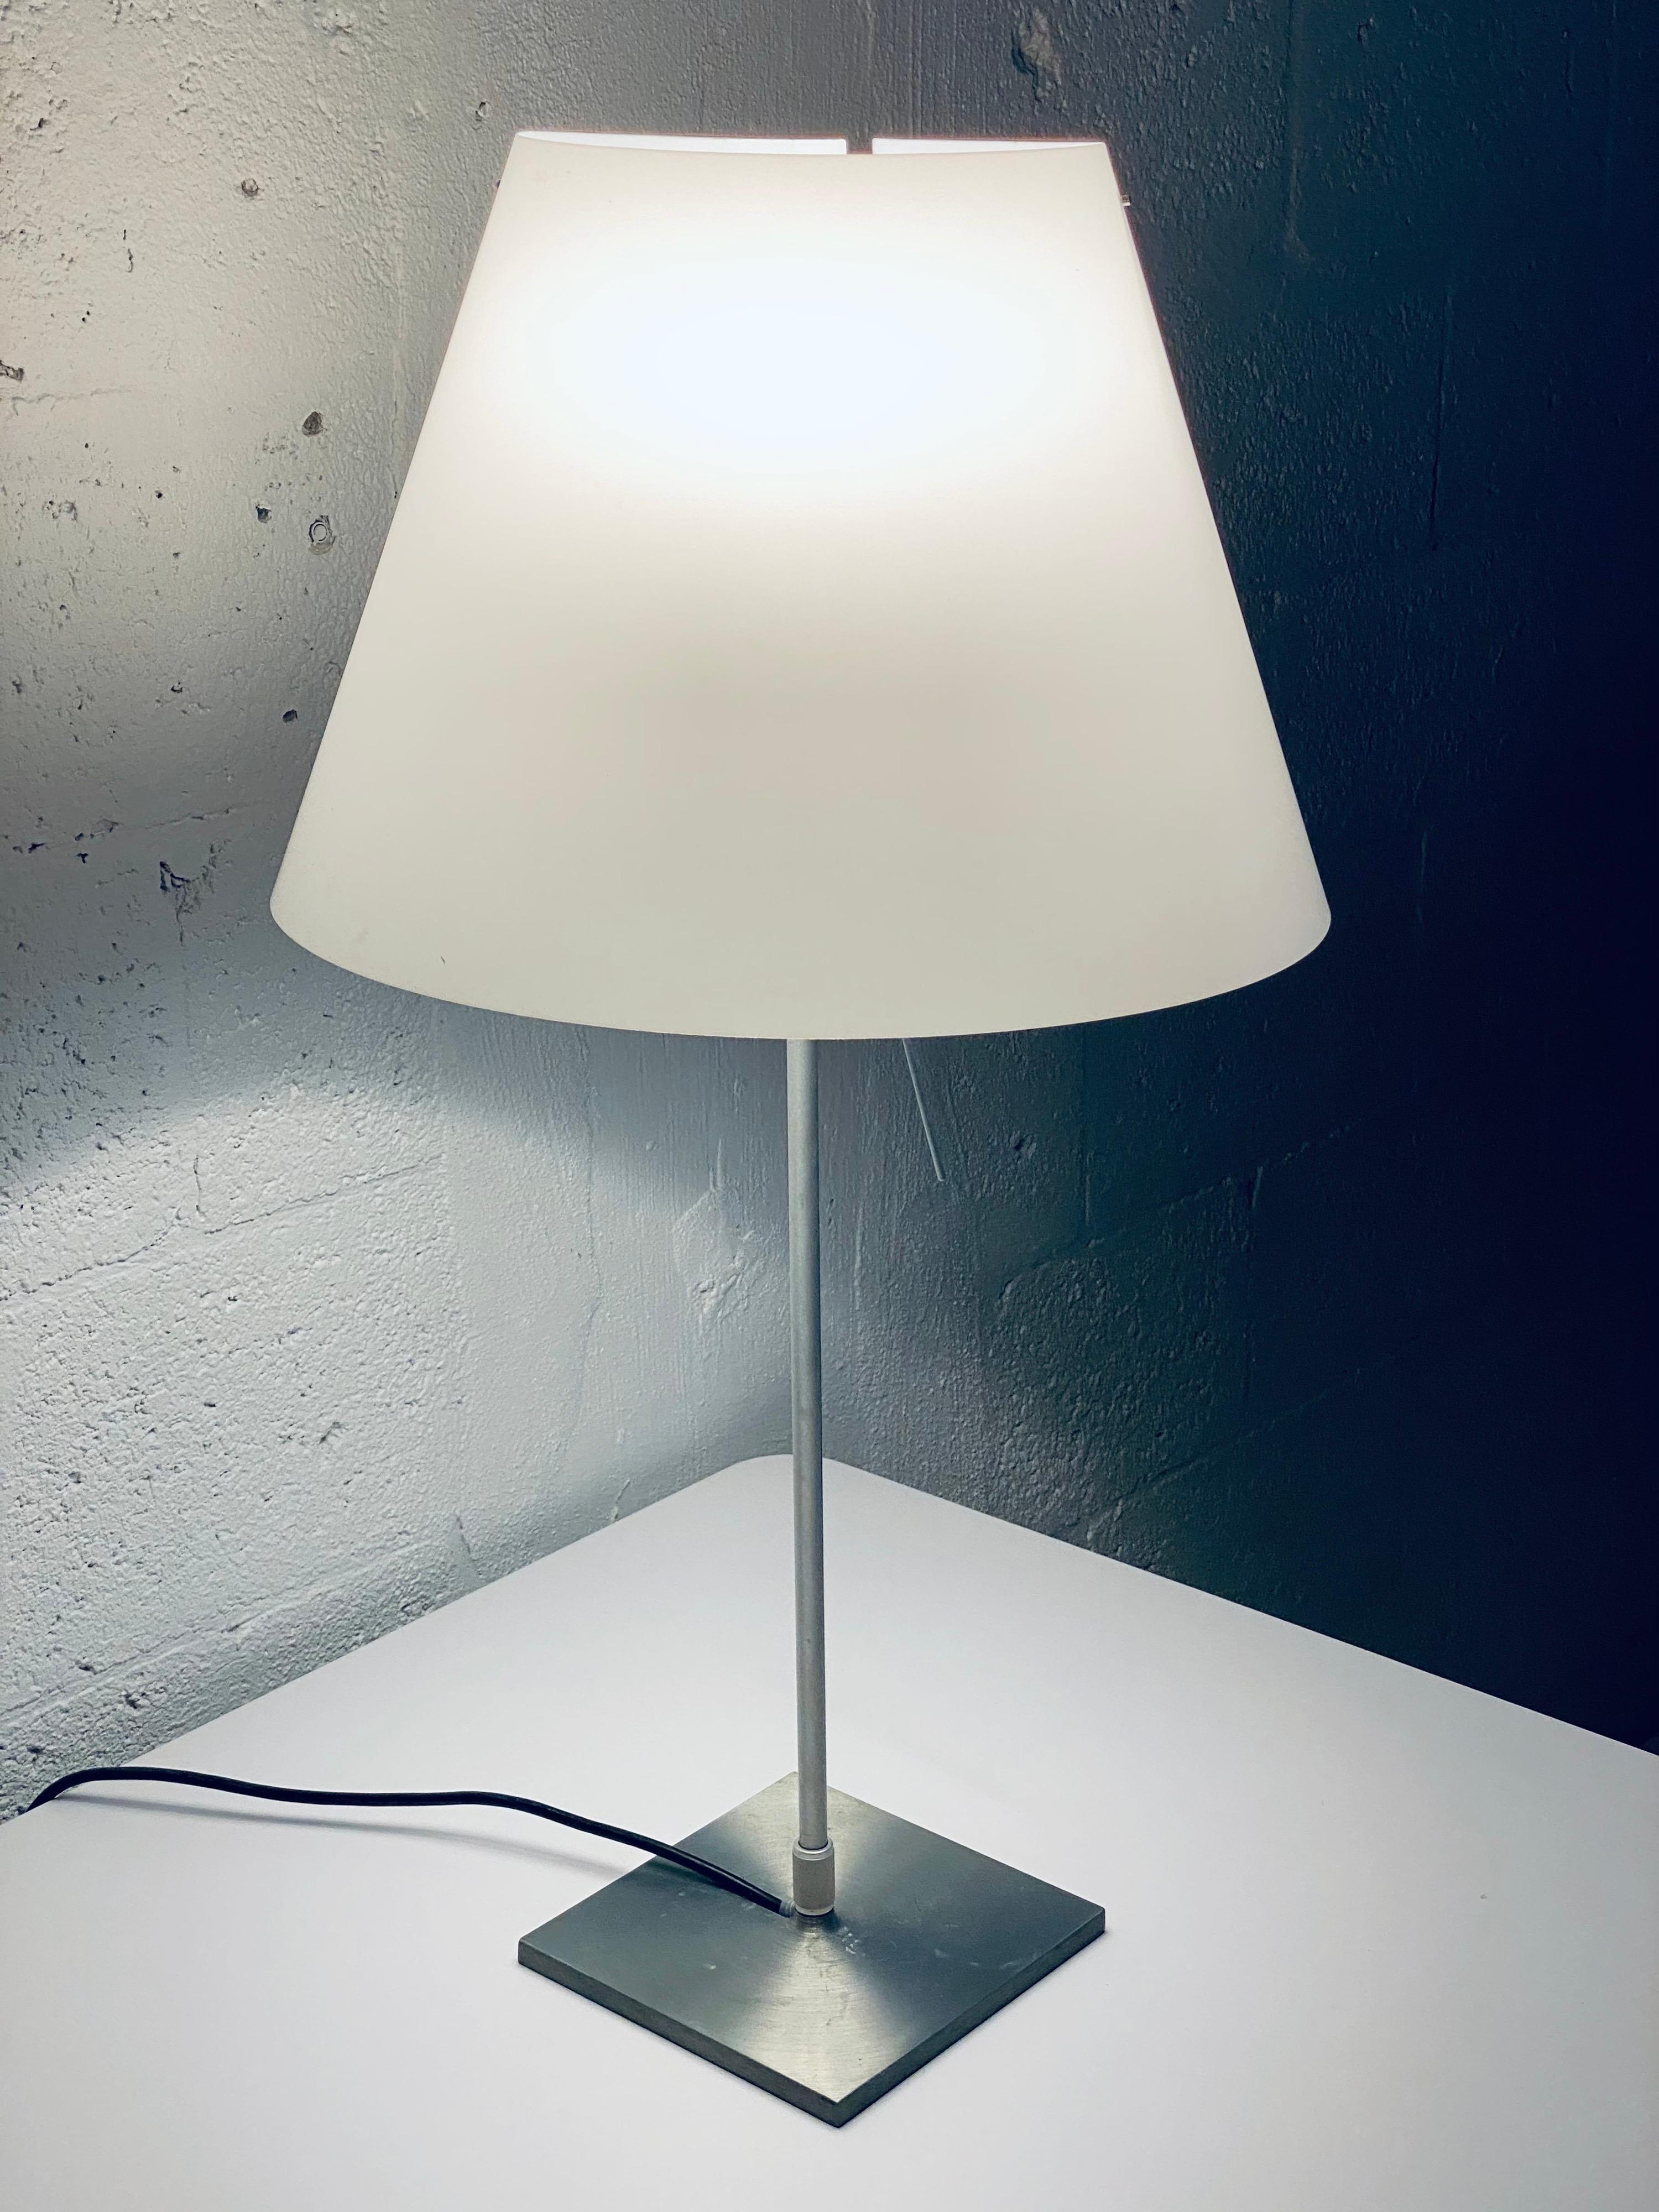 Late 20th Century Paolo Rizzatto Costanza D13 Table or Desk Lamp for Luceplan For Sale